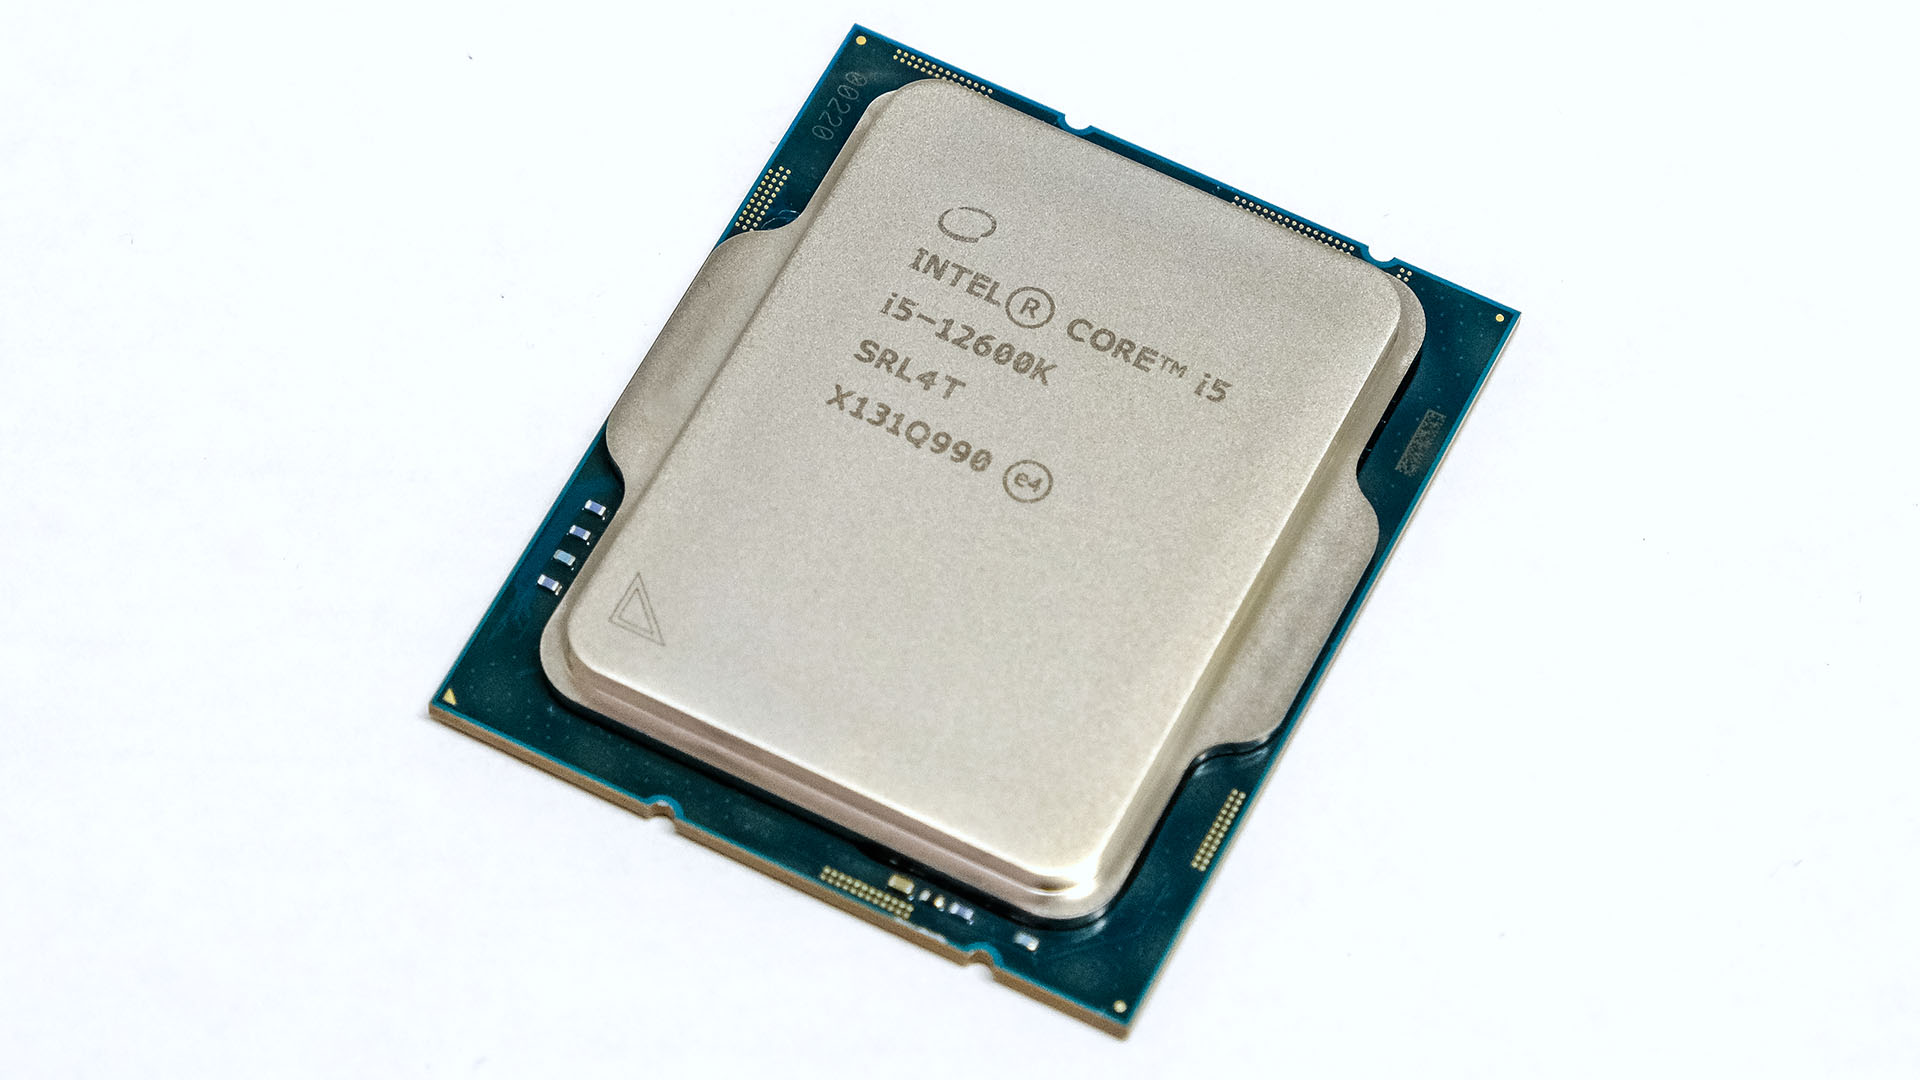 TPU] Intel Core i5-12600K Review - Winning Price/Performance : r/intel